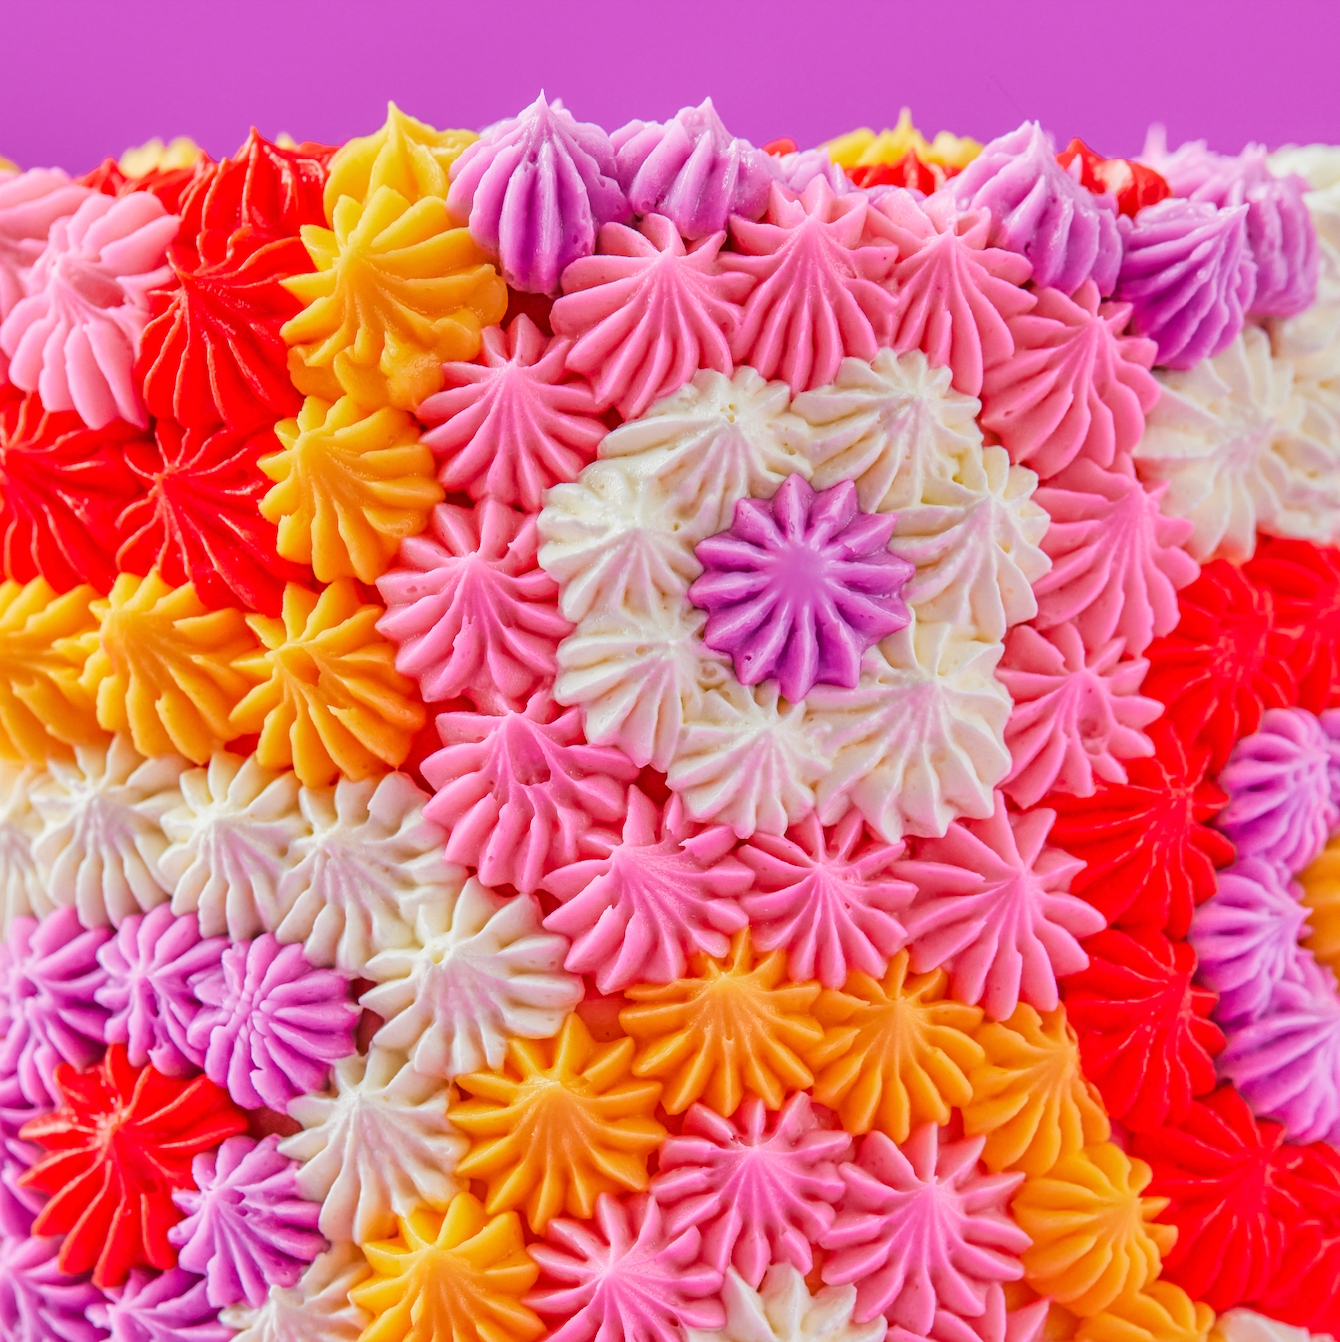 Crochet Cake - Friday, March 29